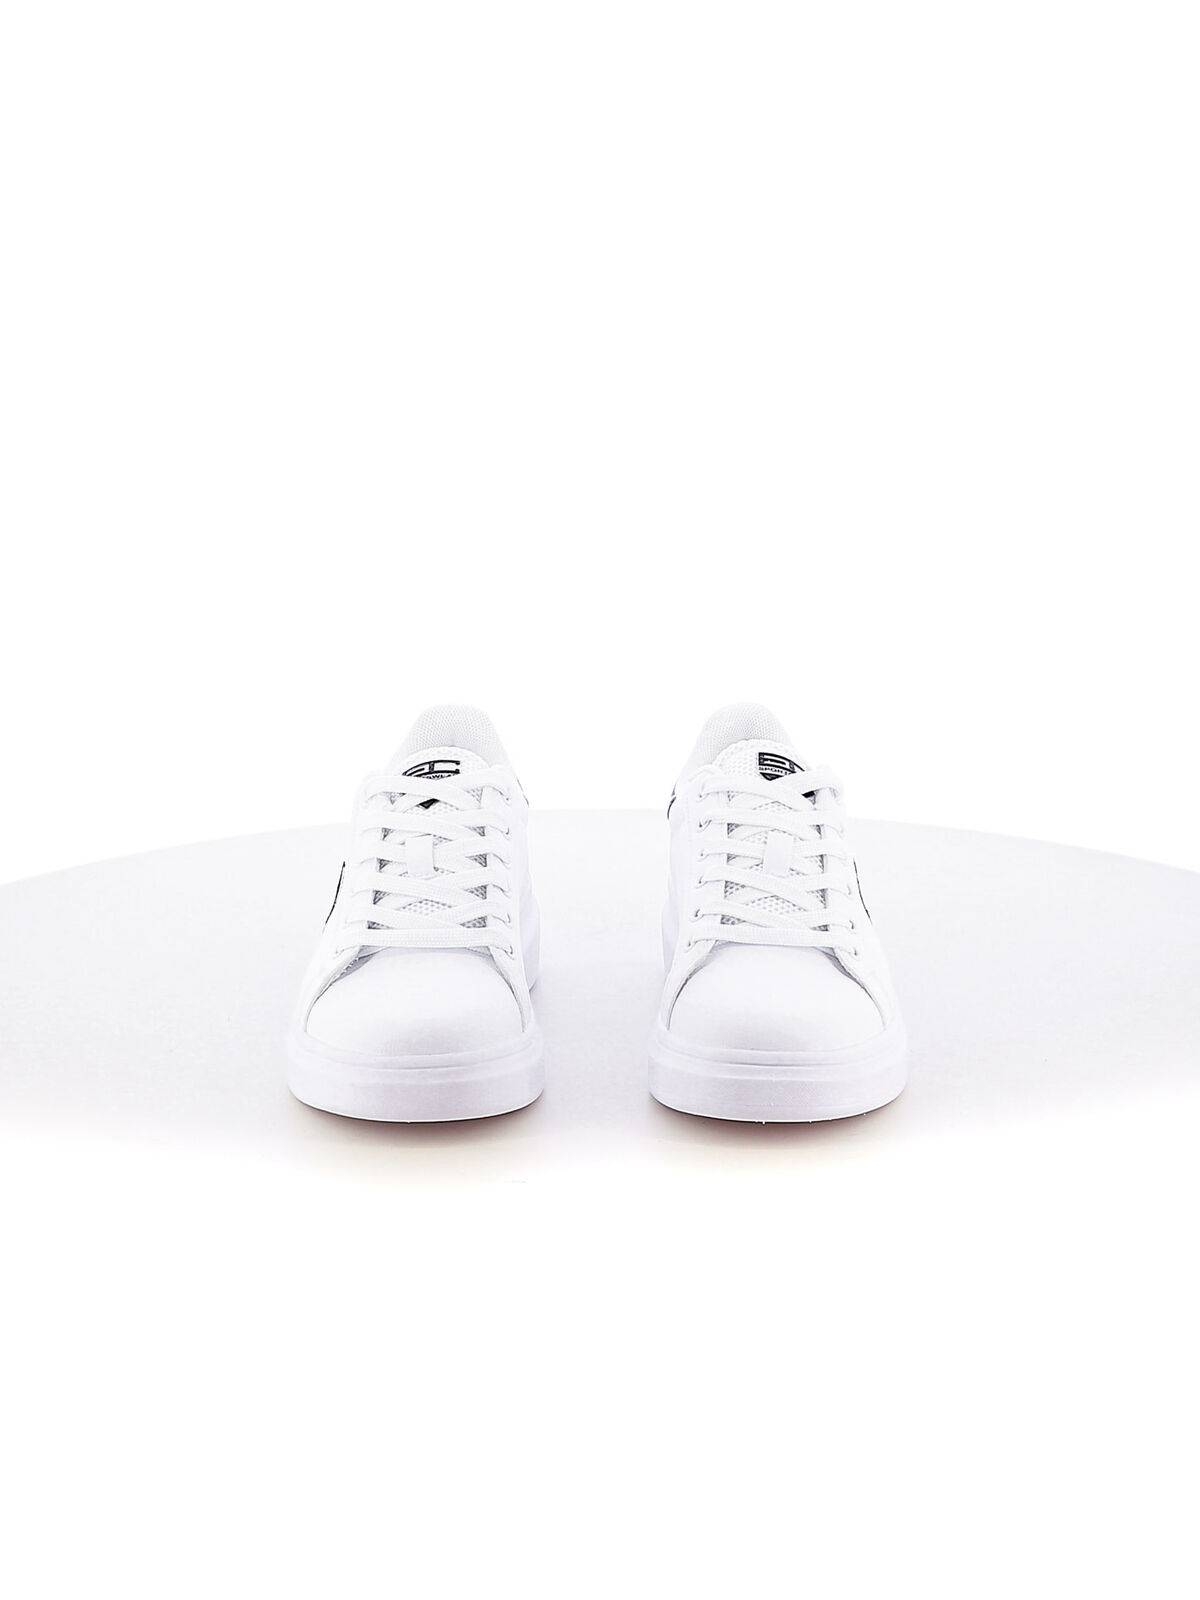 Enrico Coveri Sneakers ULAMA METAL GLITTER - White/Black